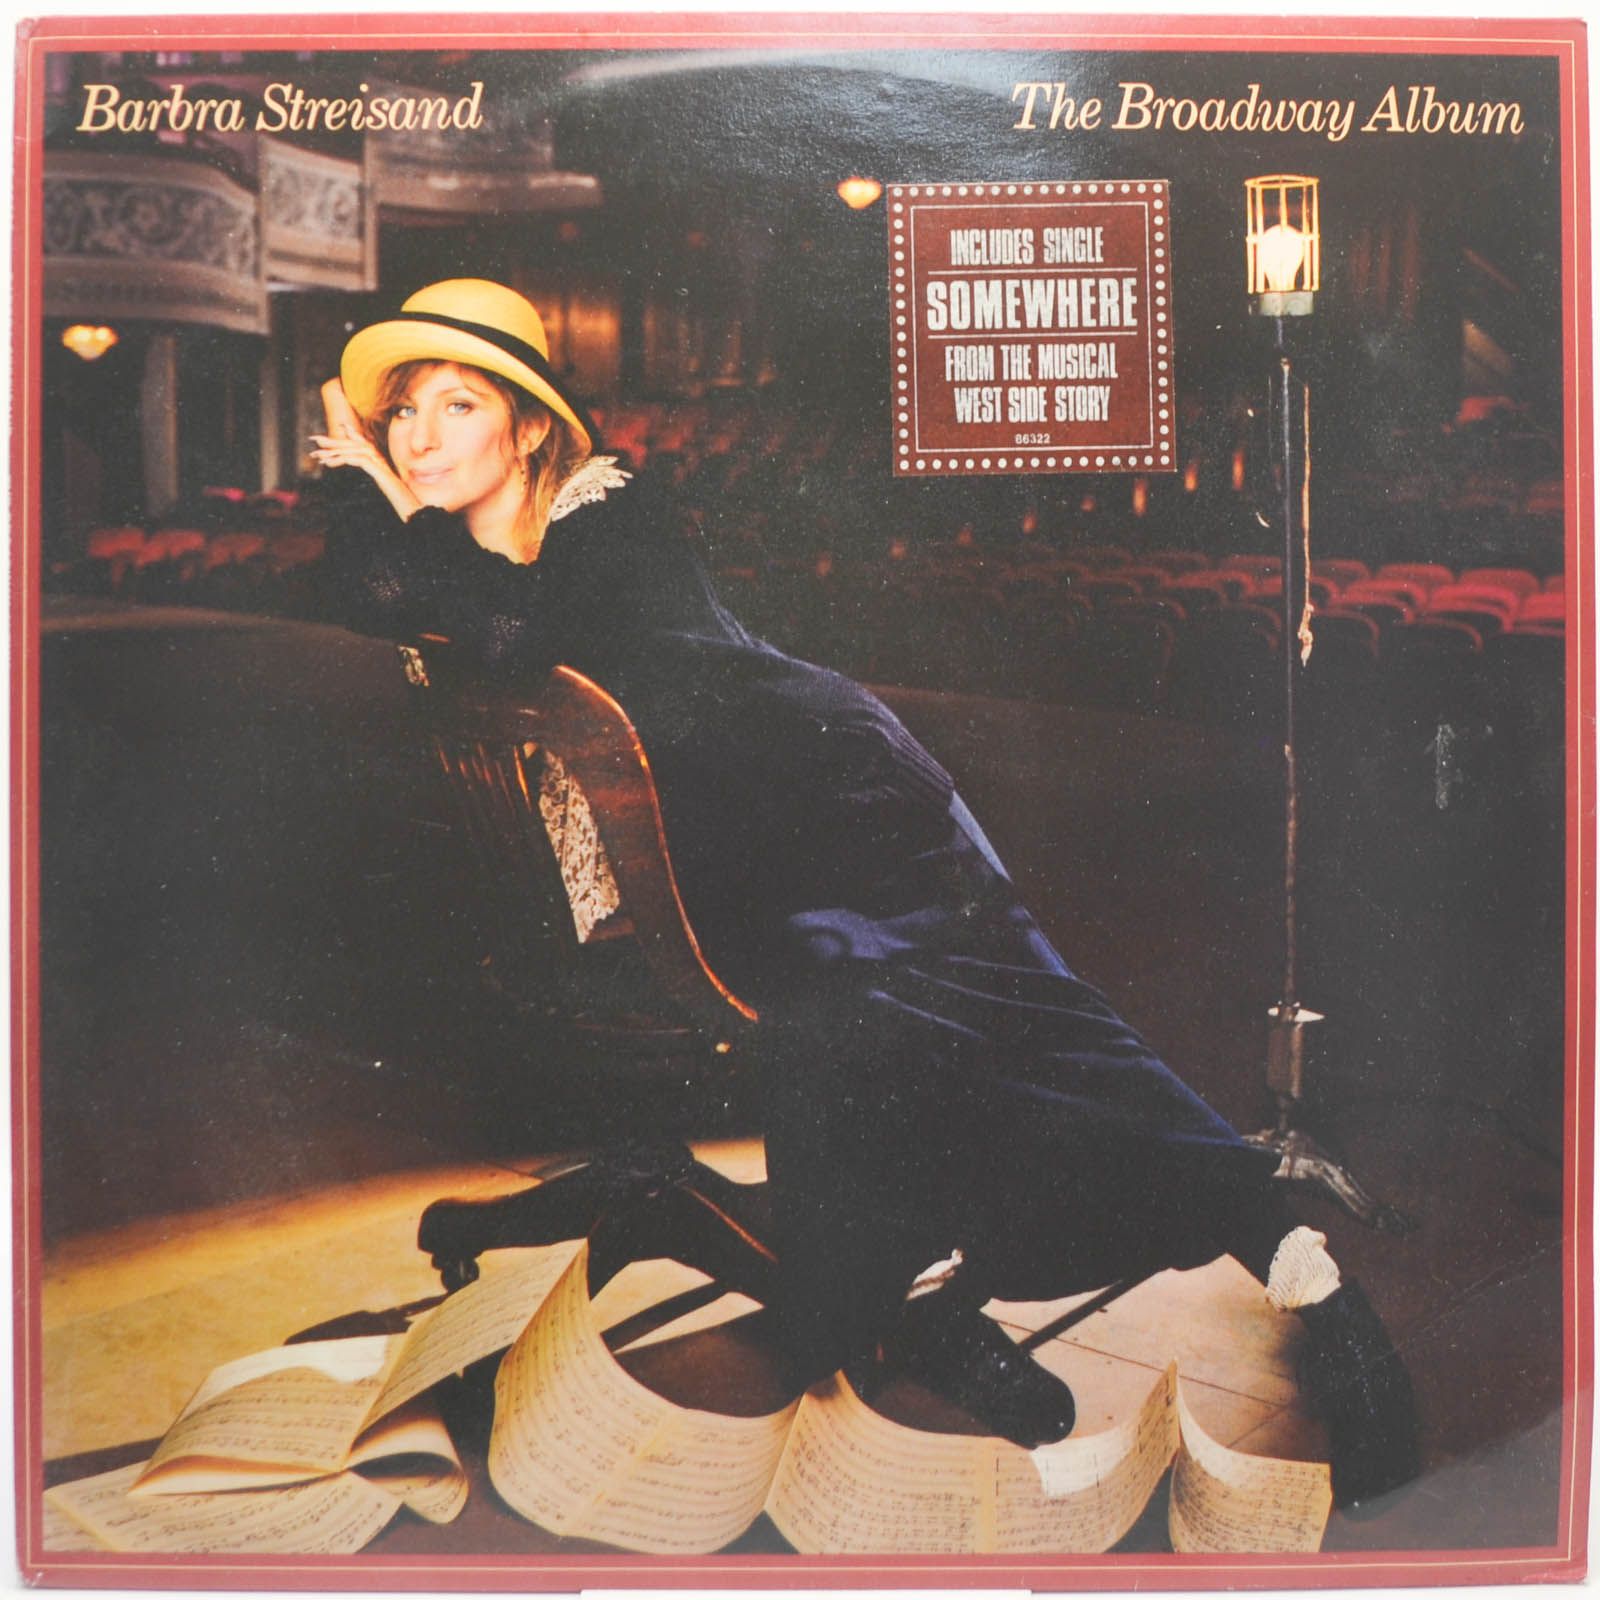 The Broadway Album, 1985